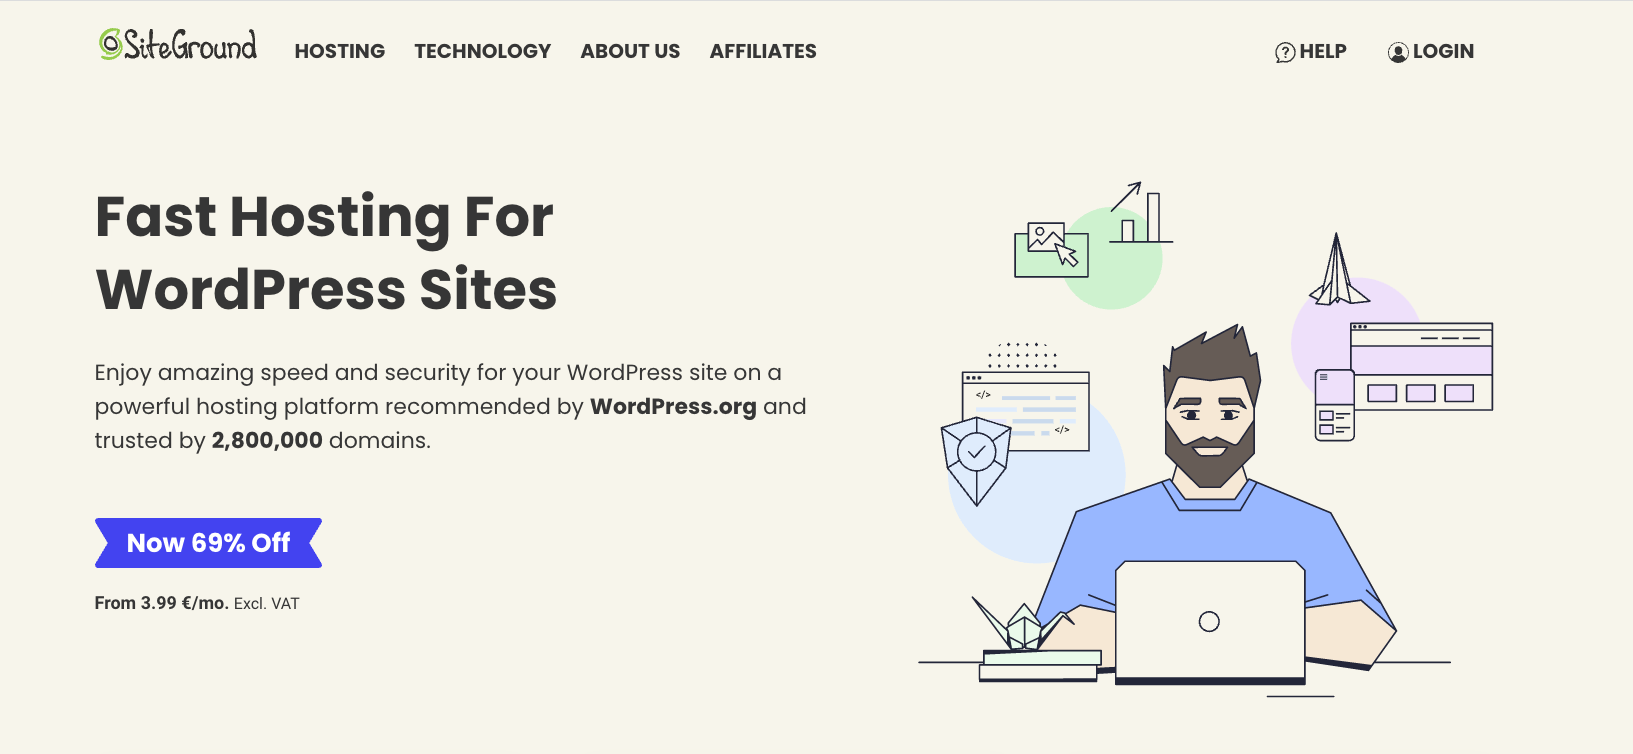 Fastest WordPress hosting: SiteGround